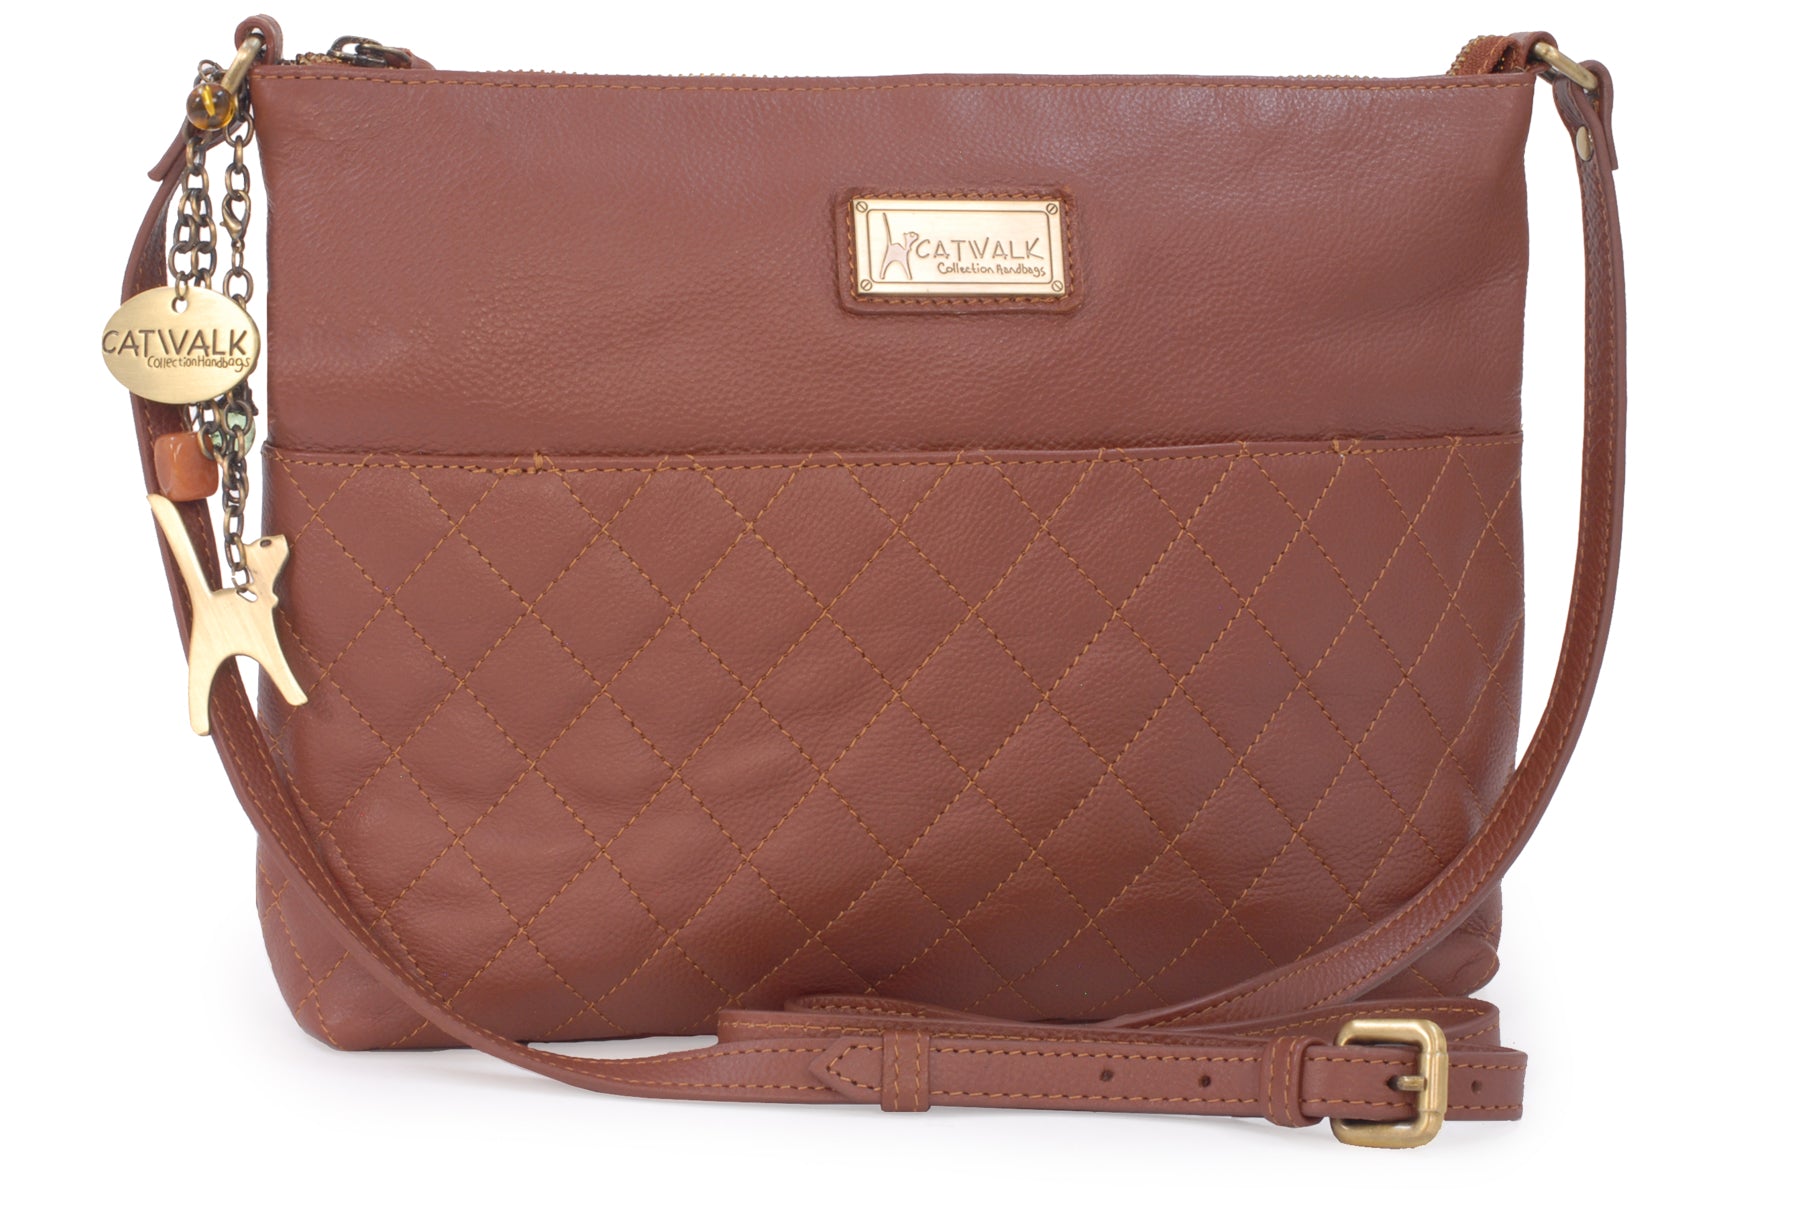 Girls Handbags - Get Upto 30% on Girls Handbags Online | Myntra